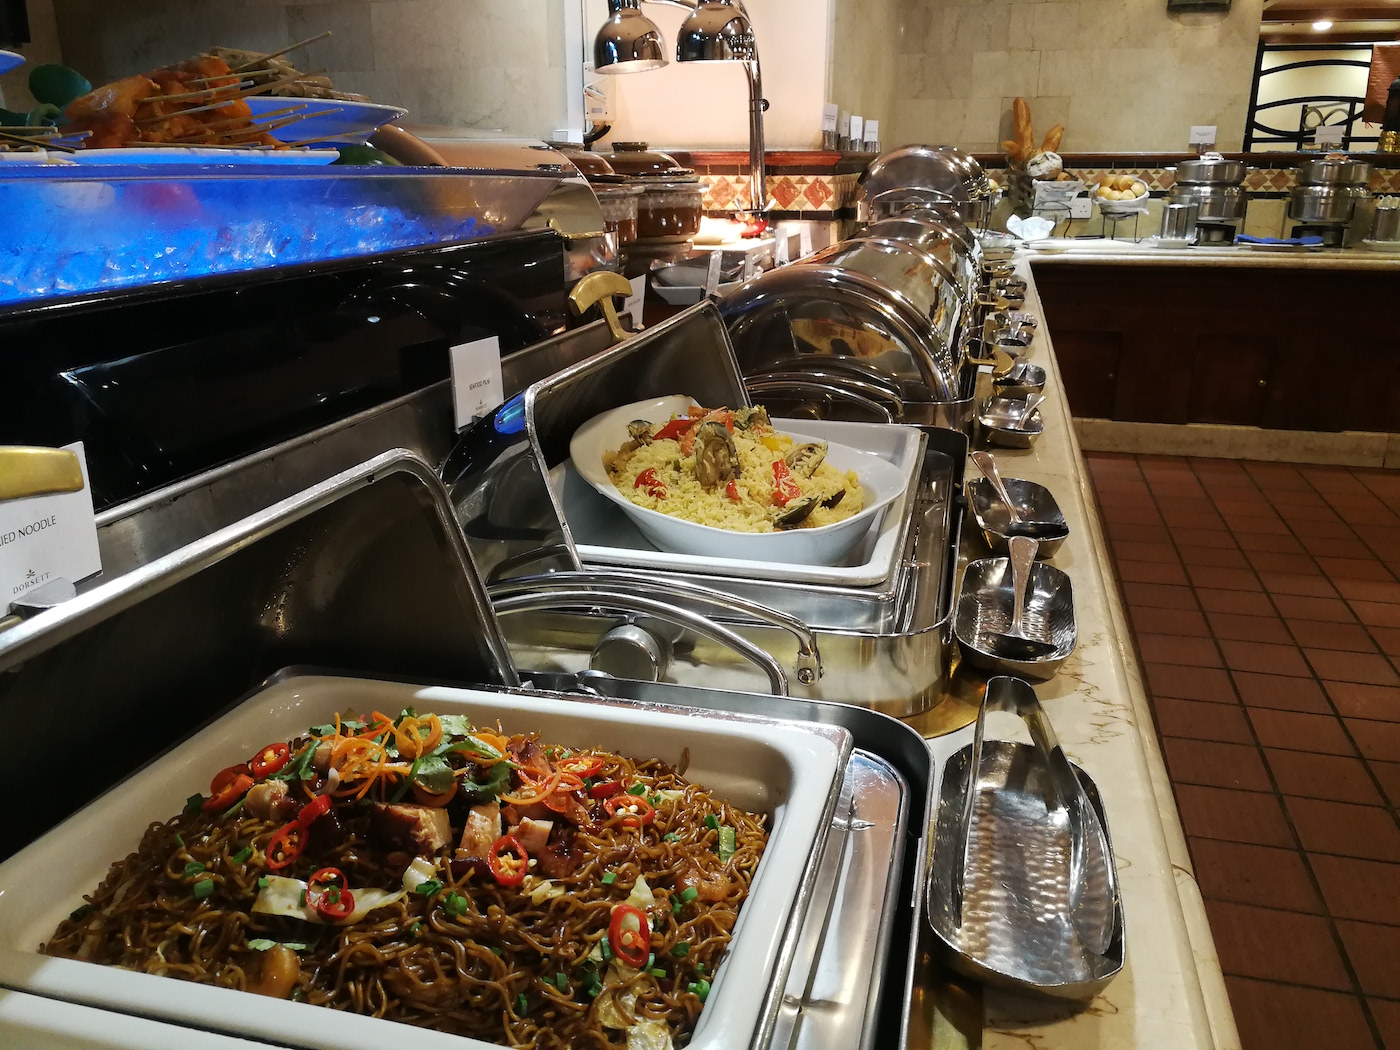 Terraza Brasserie all-day dining buffet spread